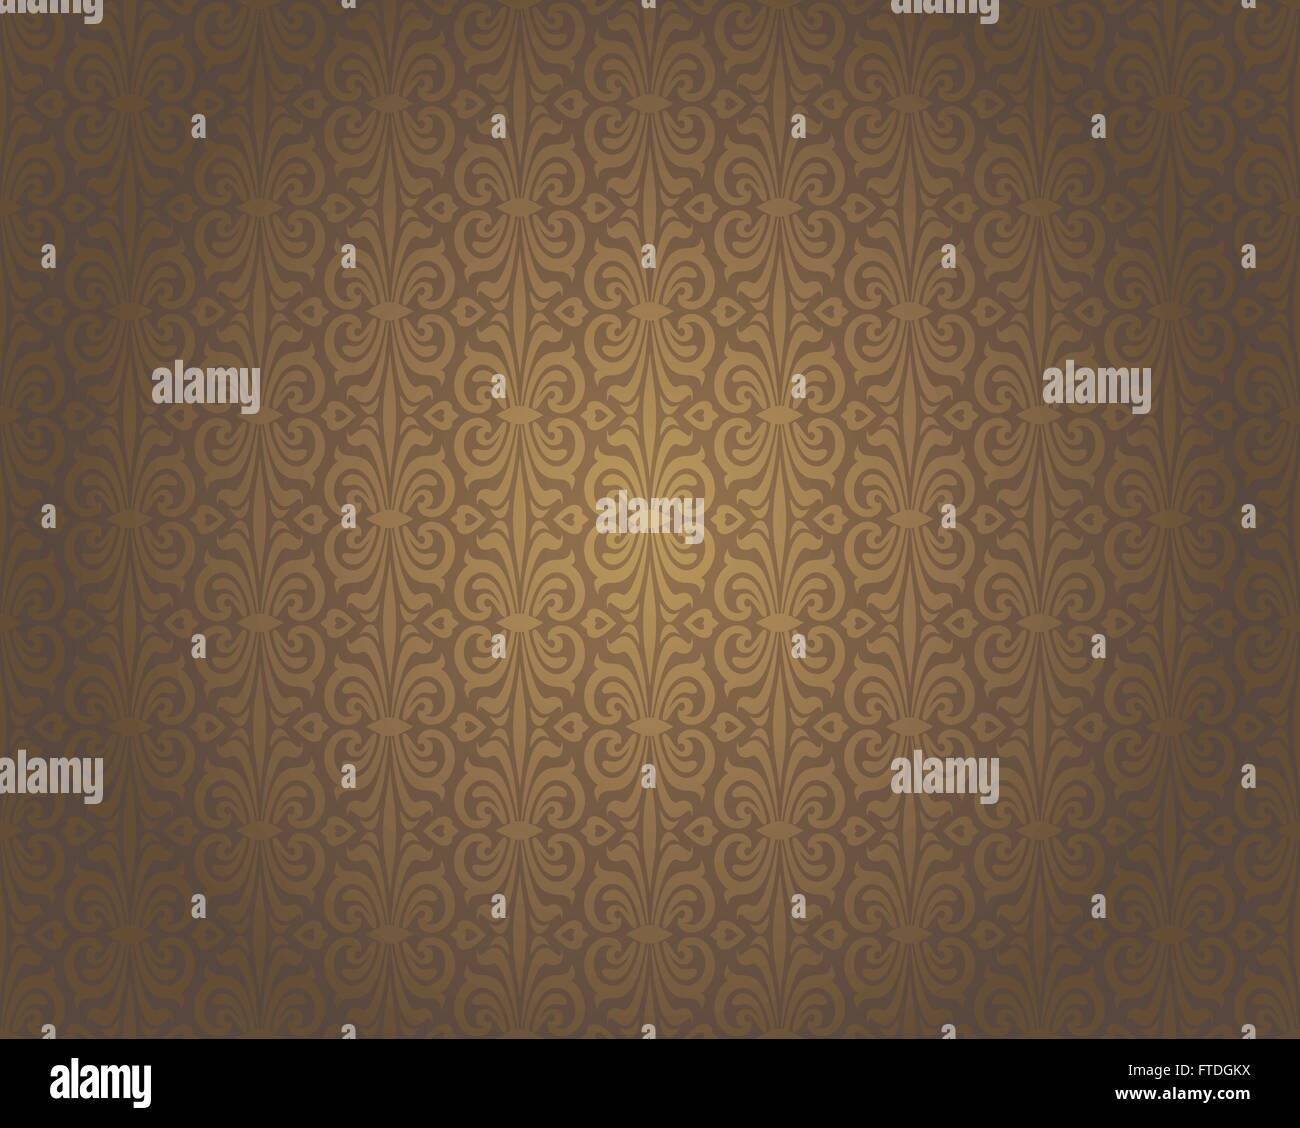 Brown vintage wallpaper background repetitive pattern design Stock Vector